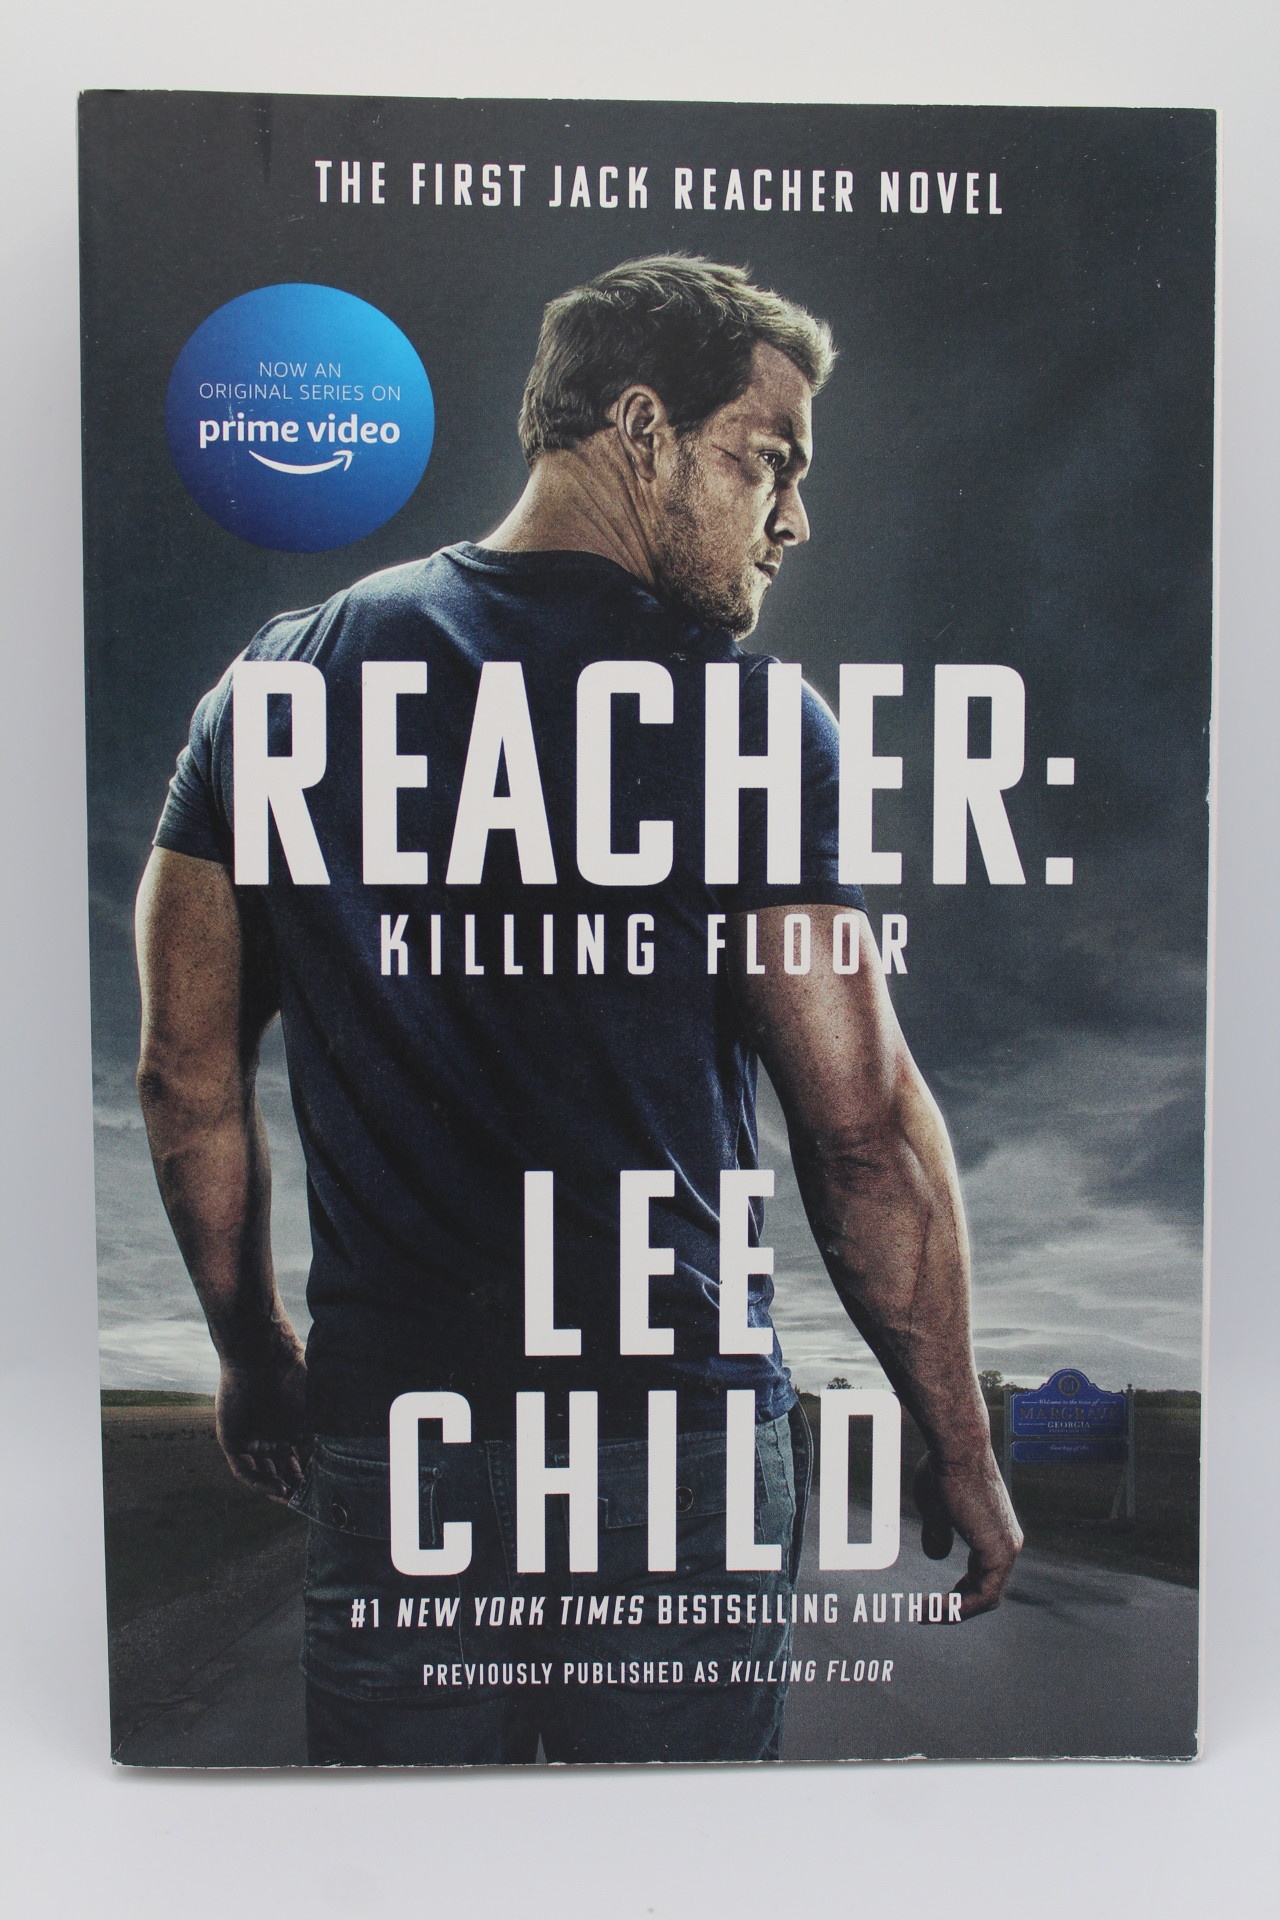 Child, Lee: Reacher: Killing Floor (Jack Reacher #1) - Unlimited Characters